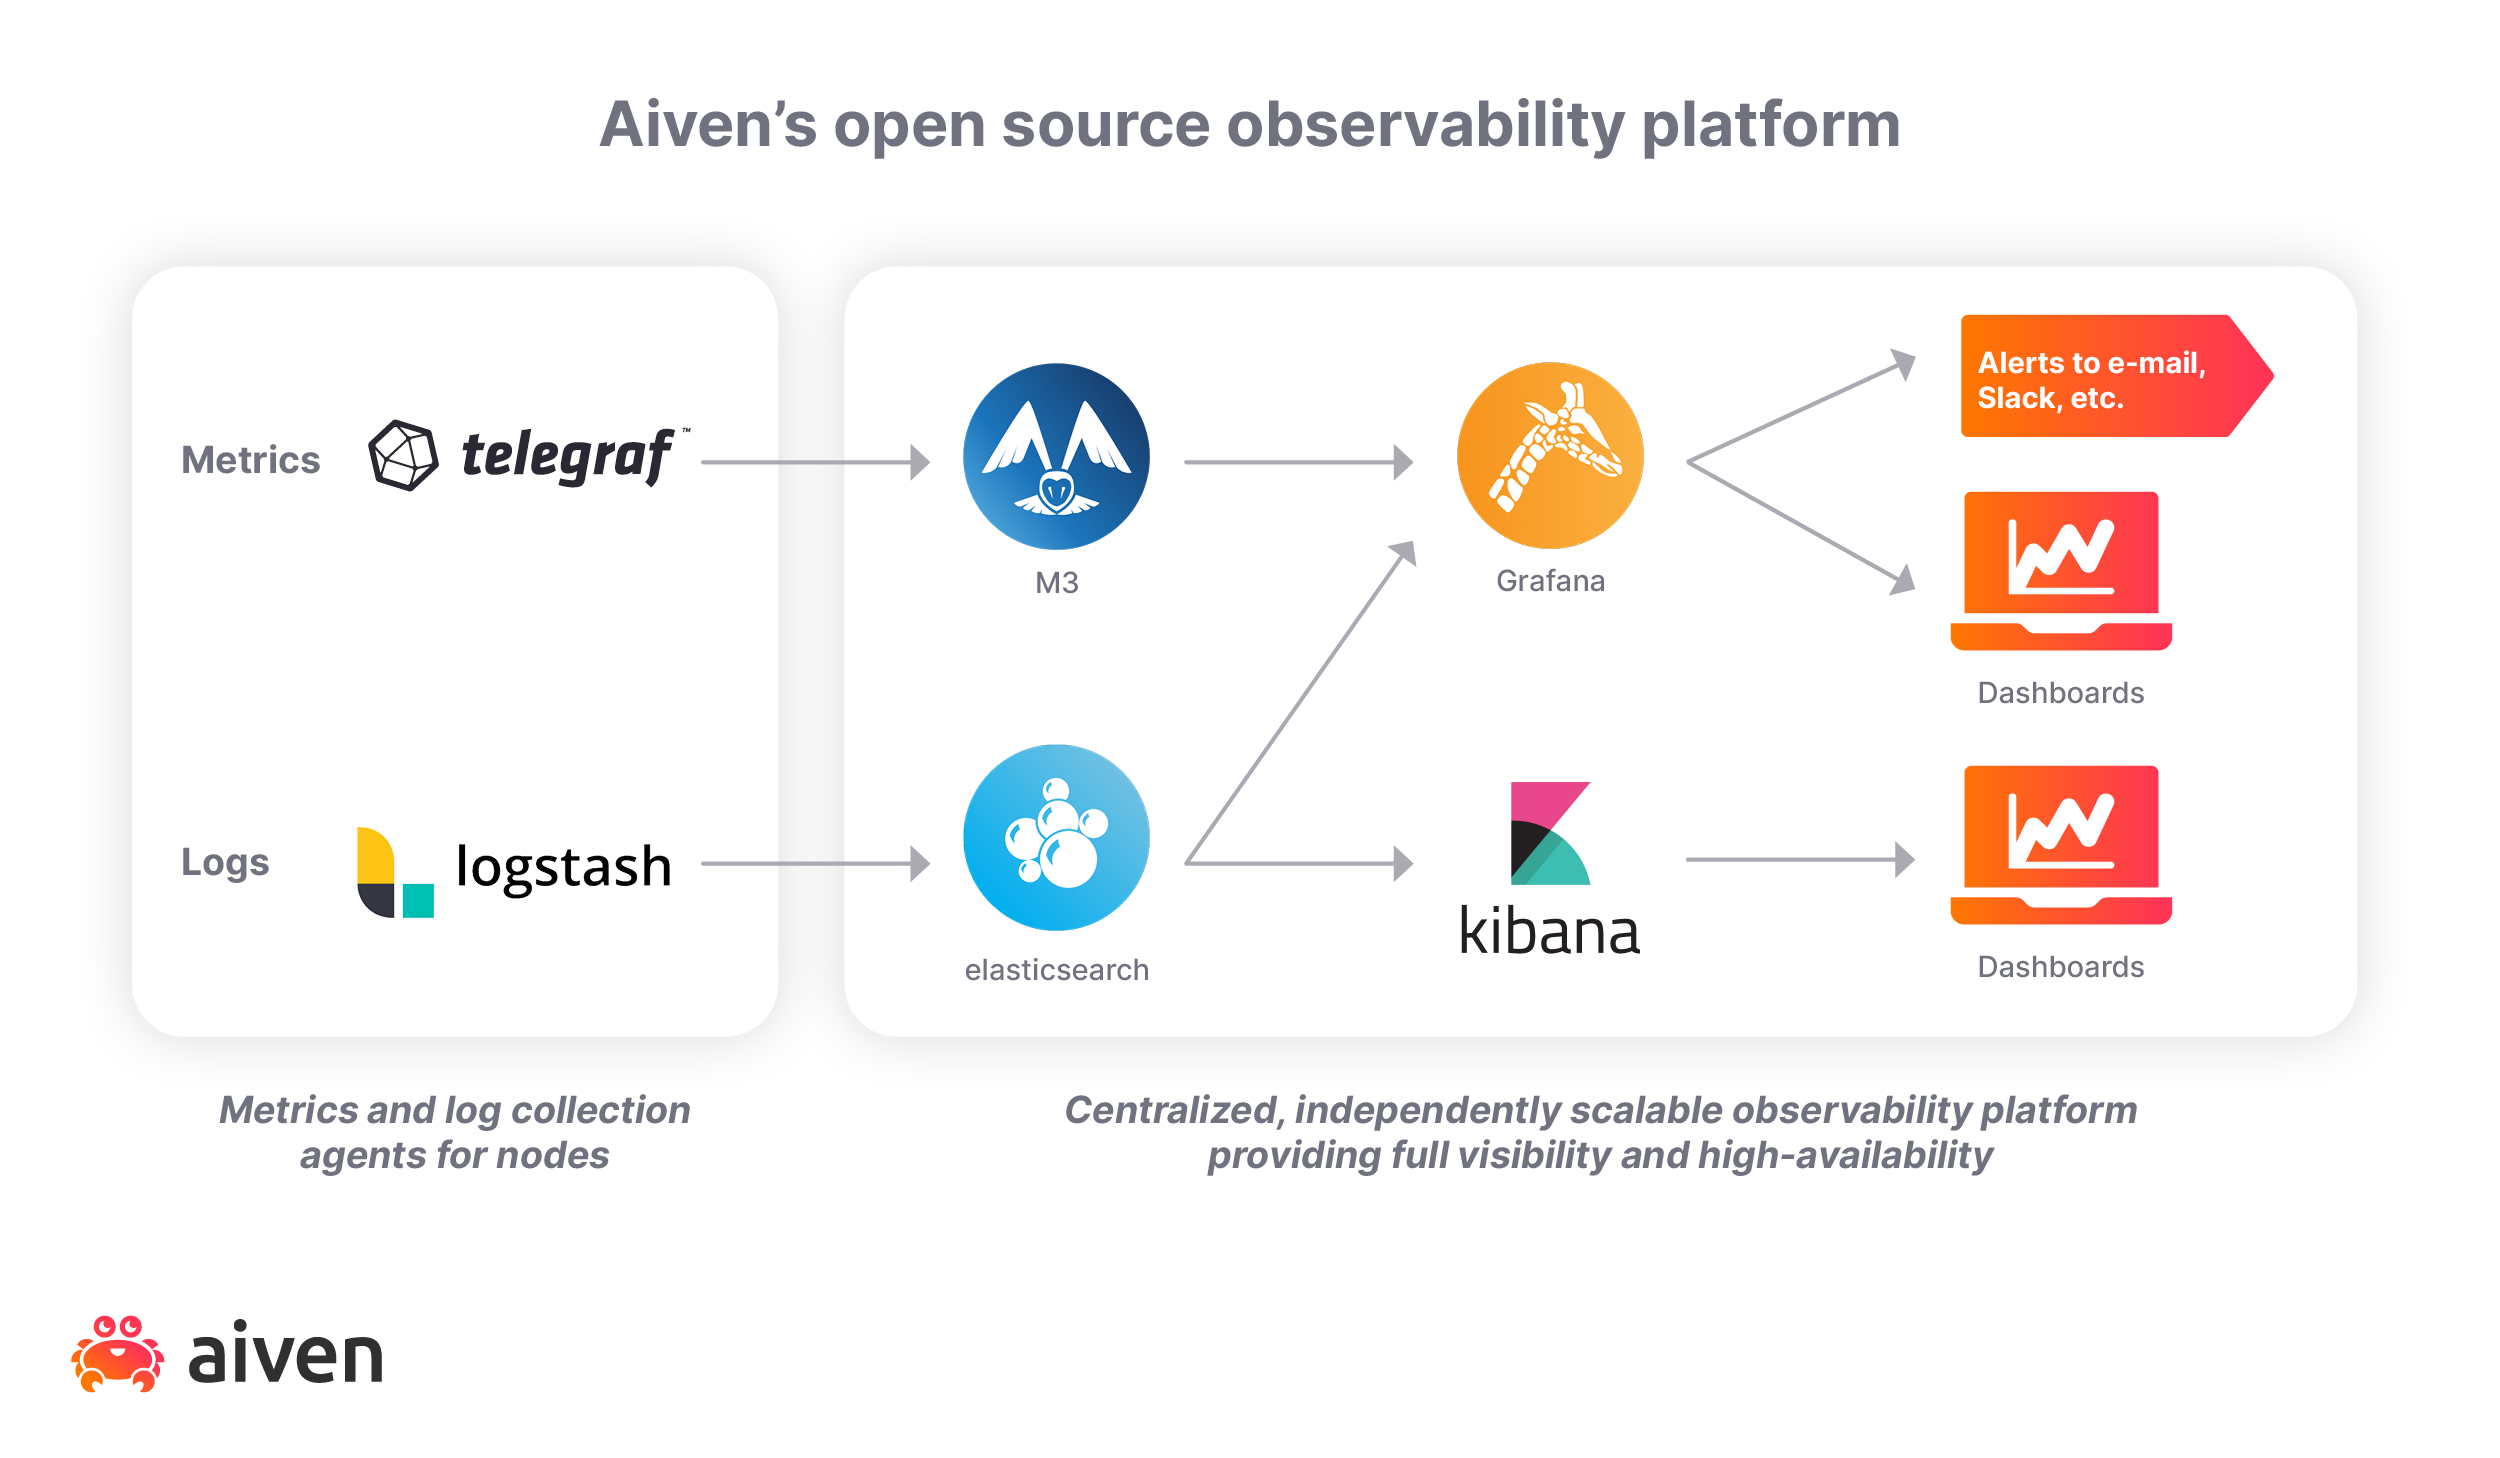 Aiven's open source observability platform